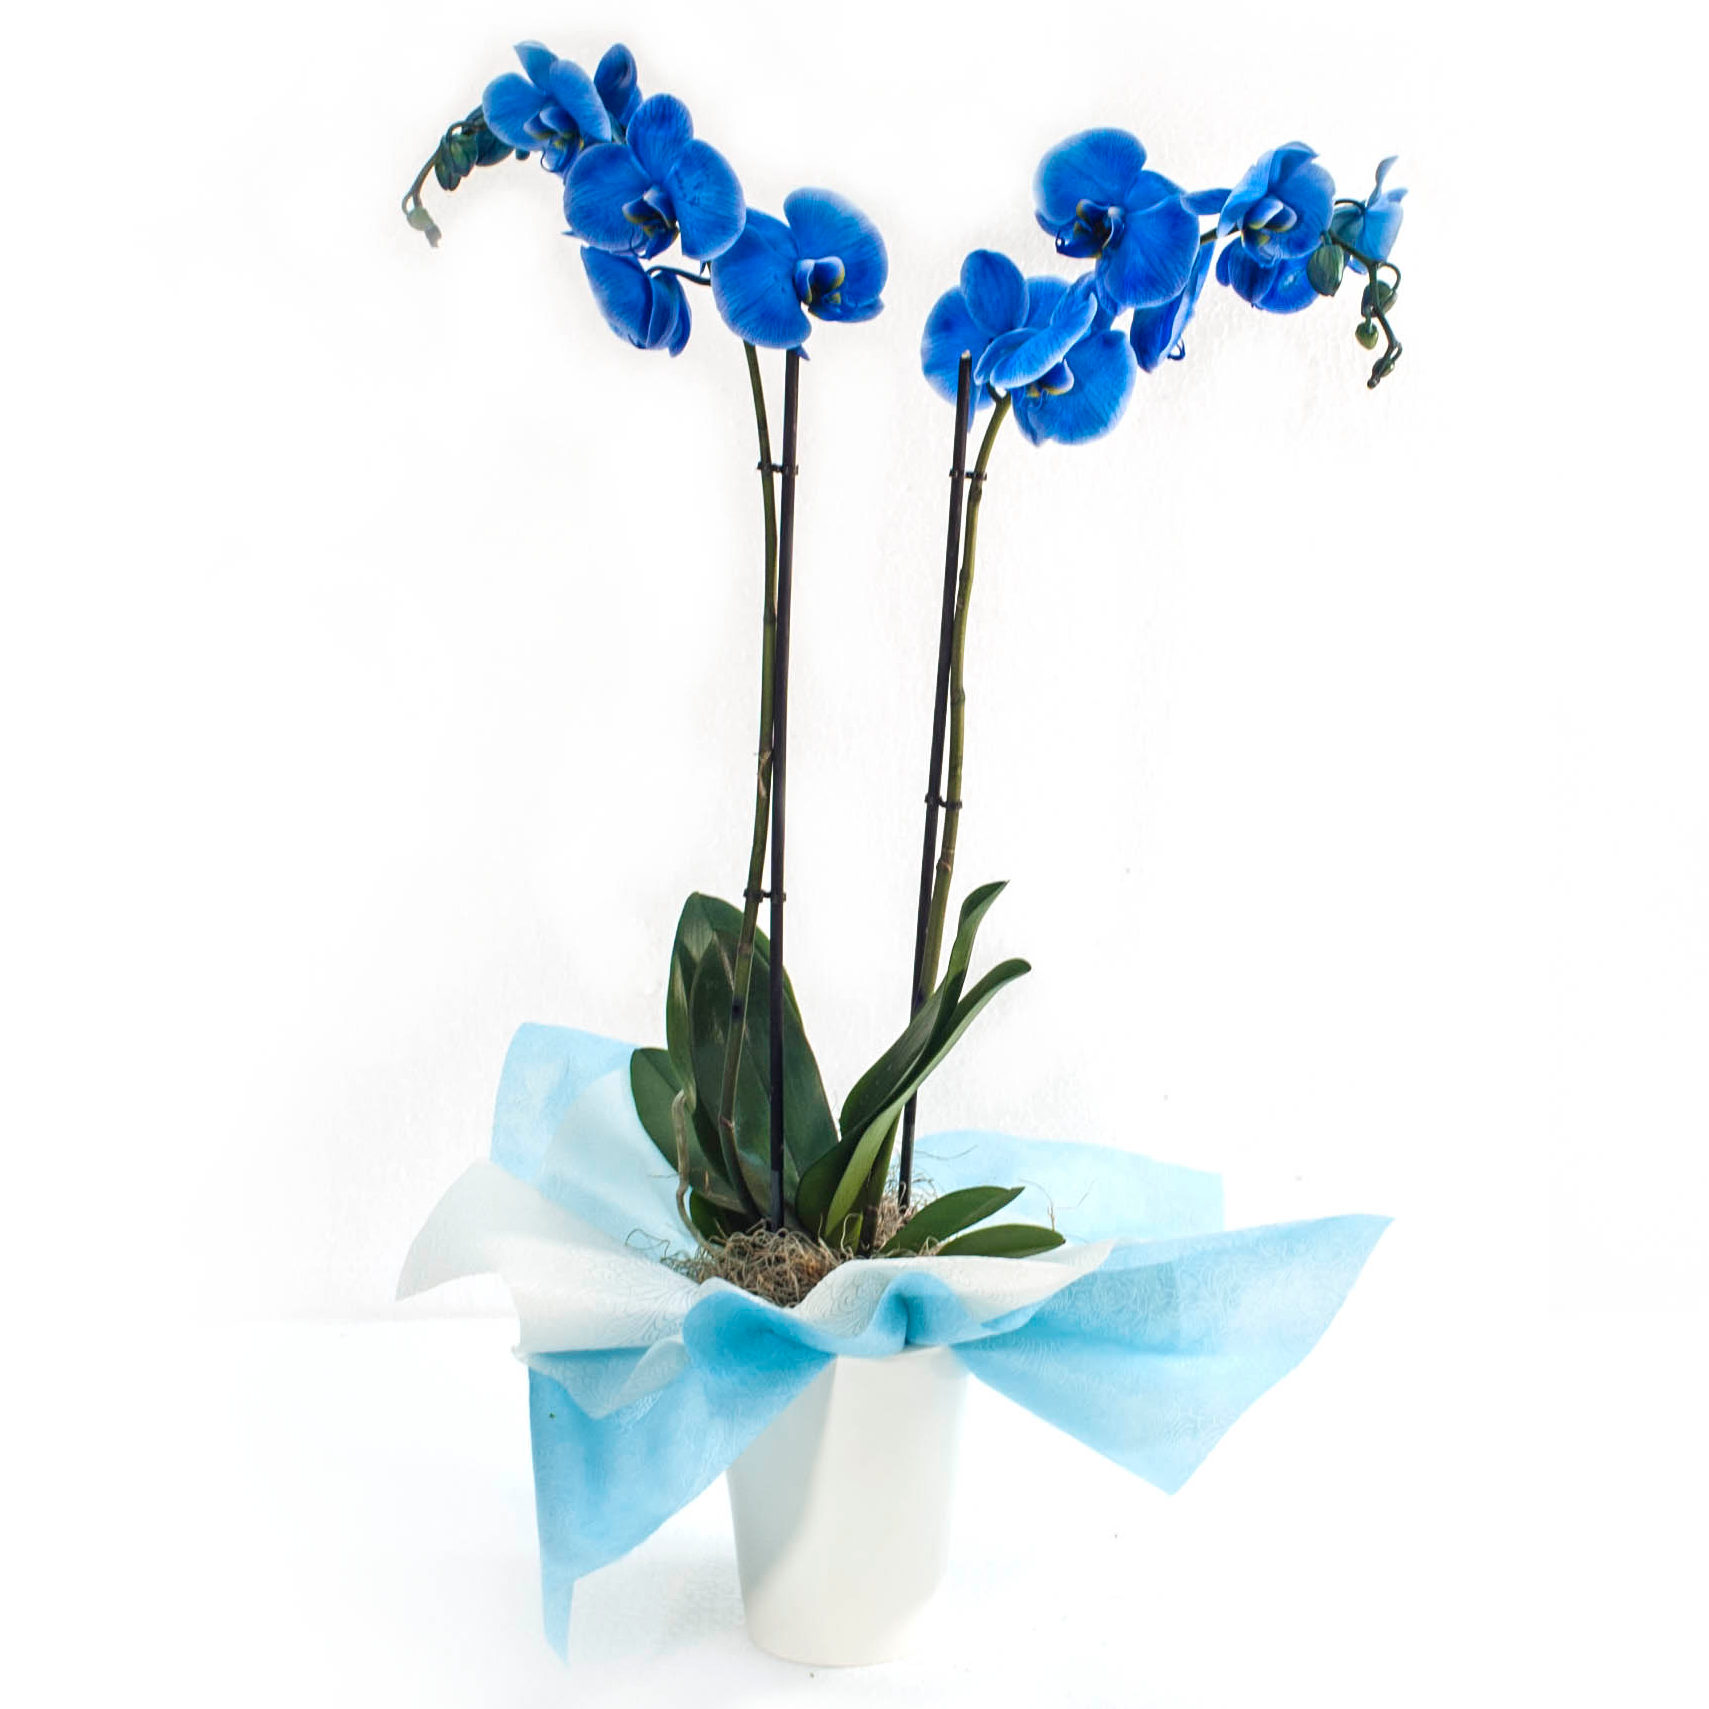  Blue Phalenopsis Orchids